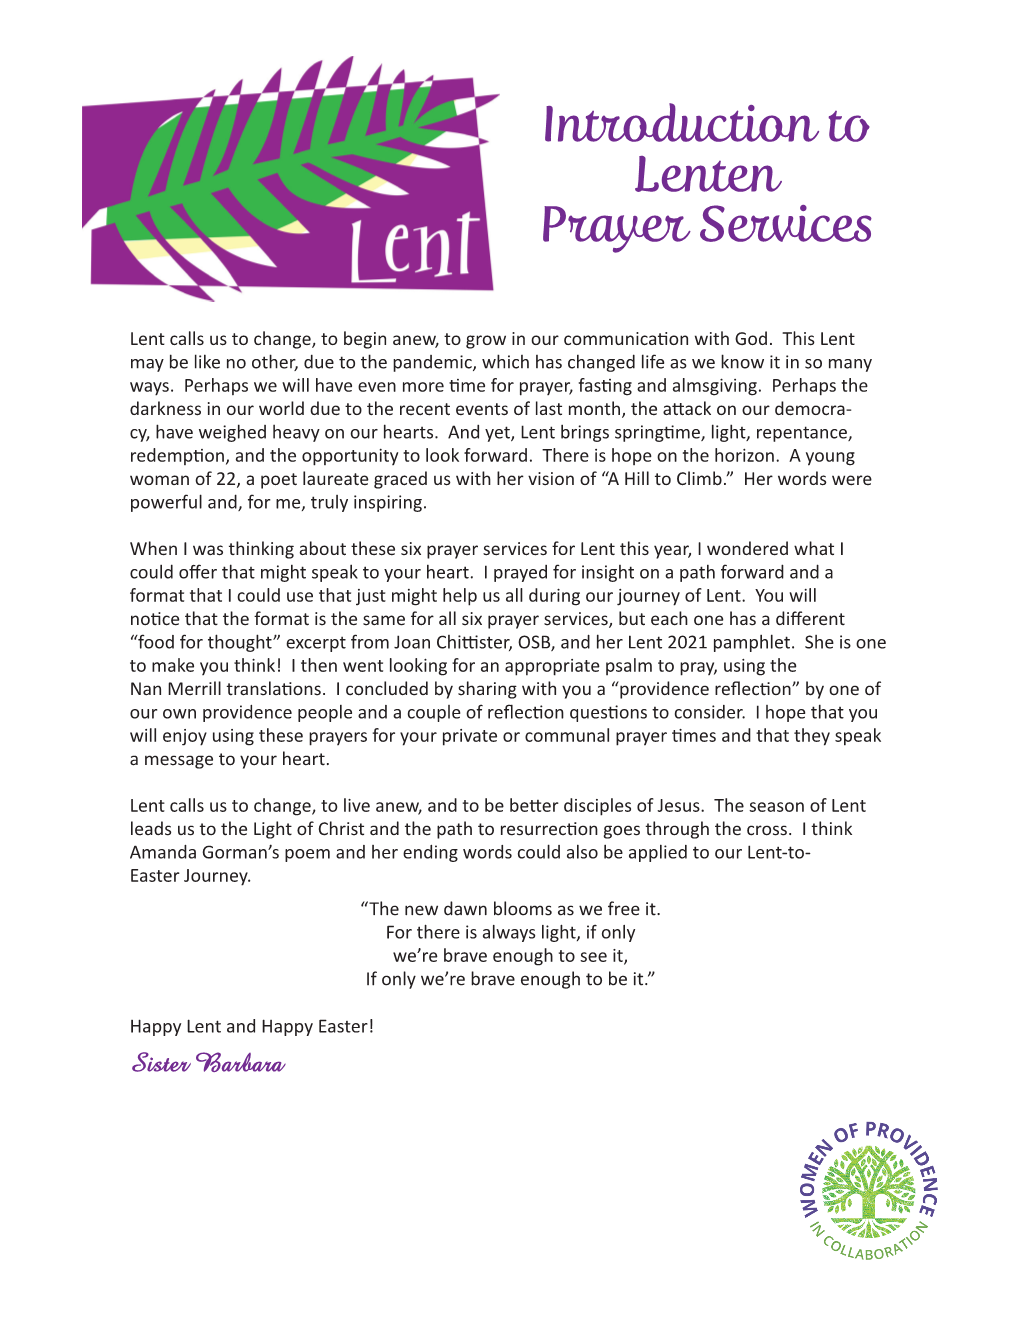 Introduction to Lenten Prayer Services